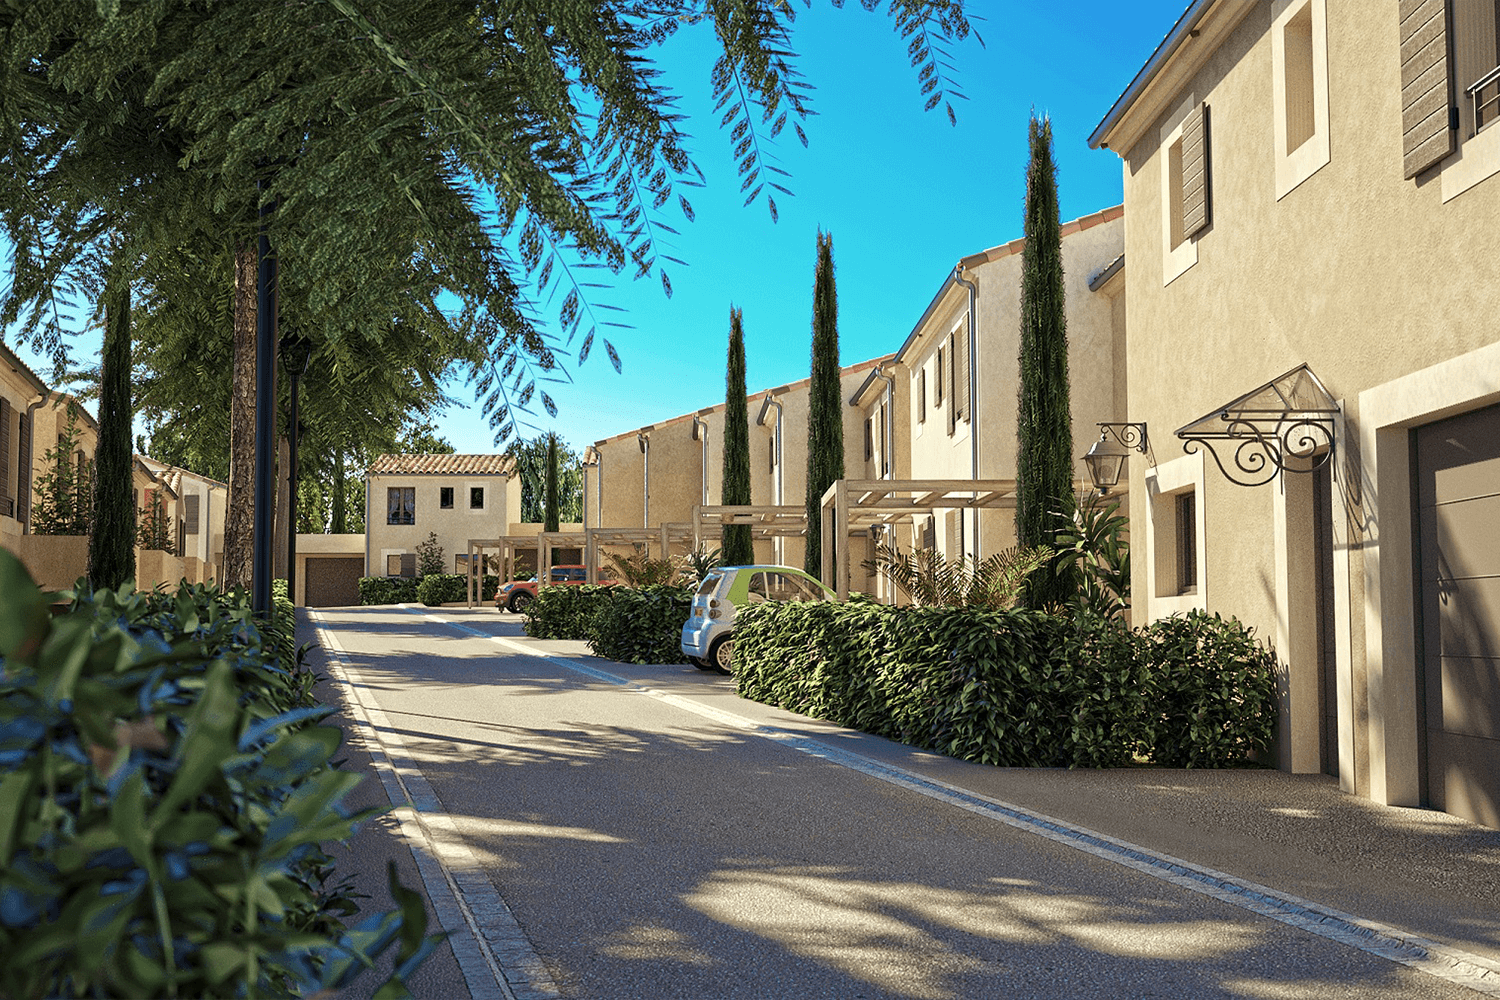 Villa augustine beziers la courondelle achat neuf programme residence investissement herault occitanie sud de france